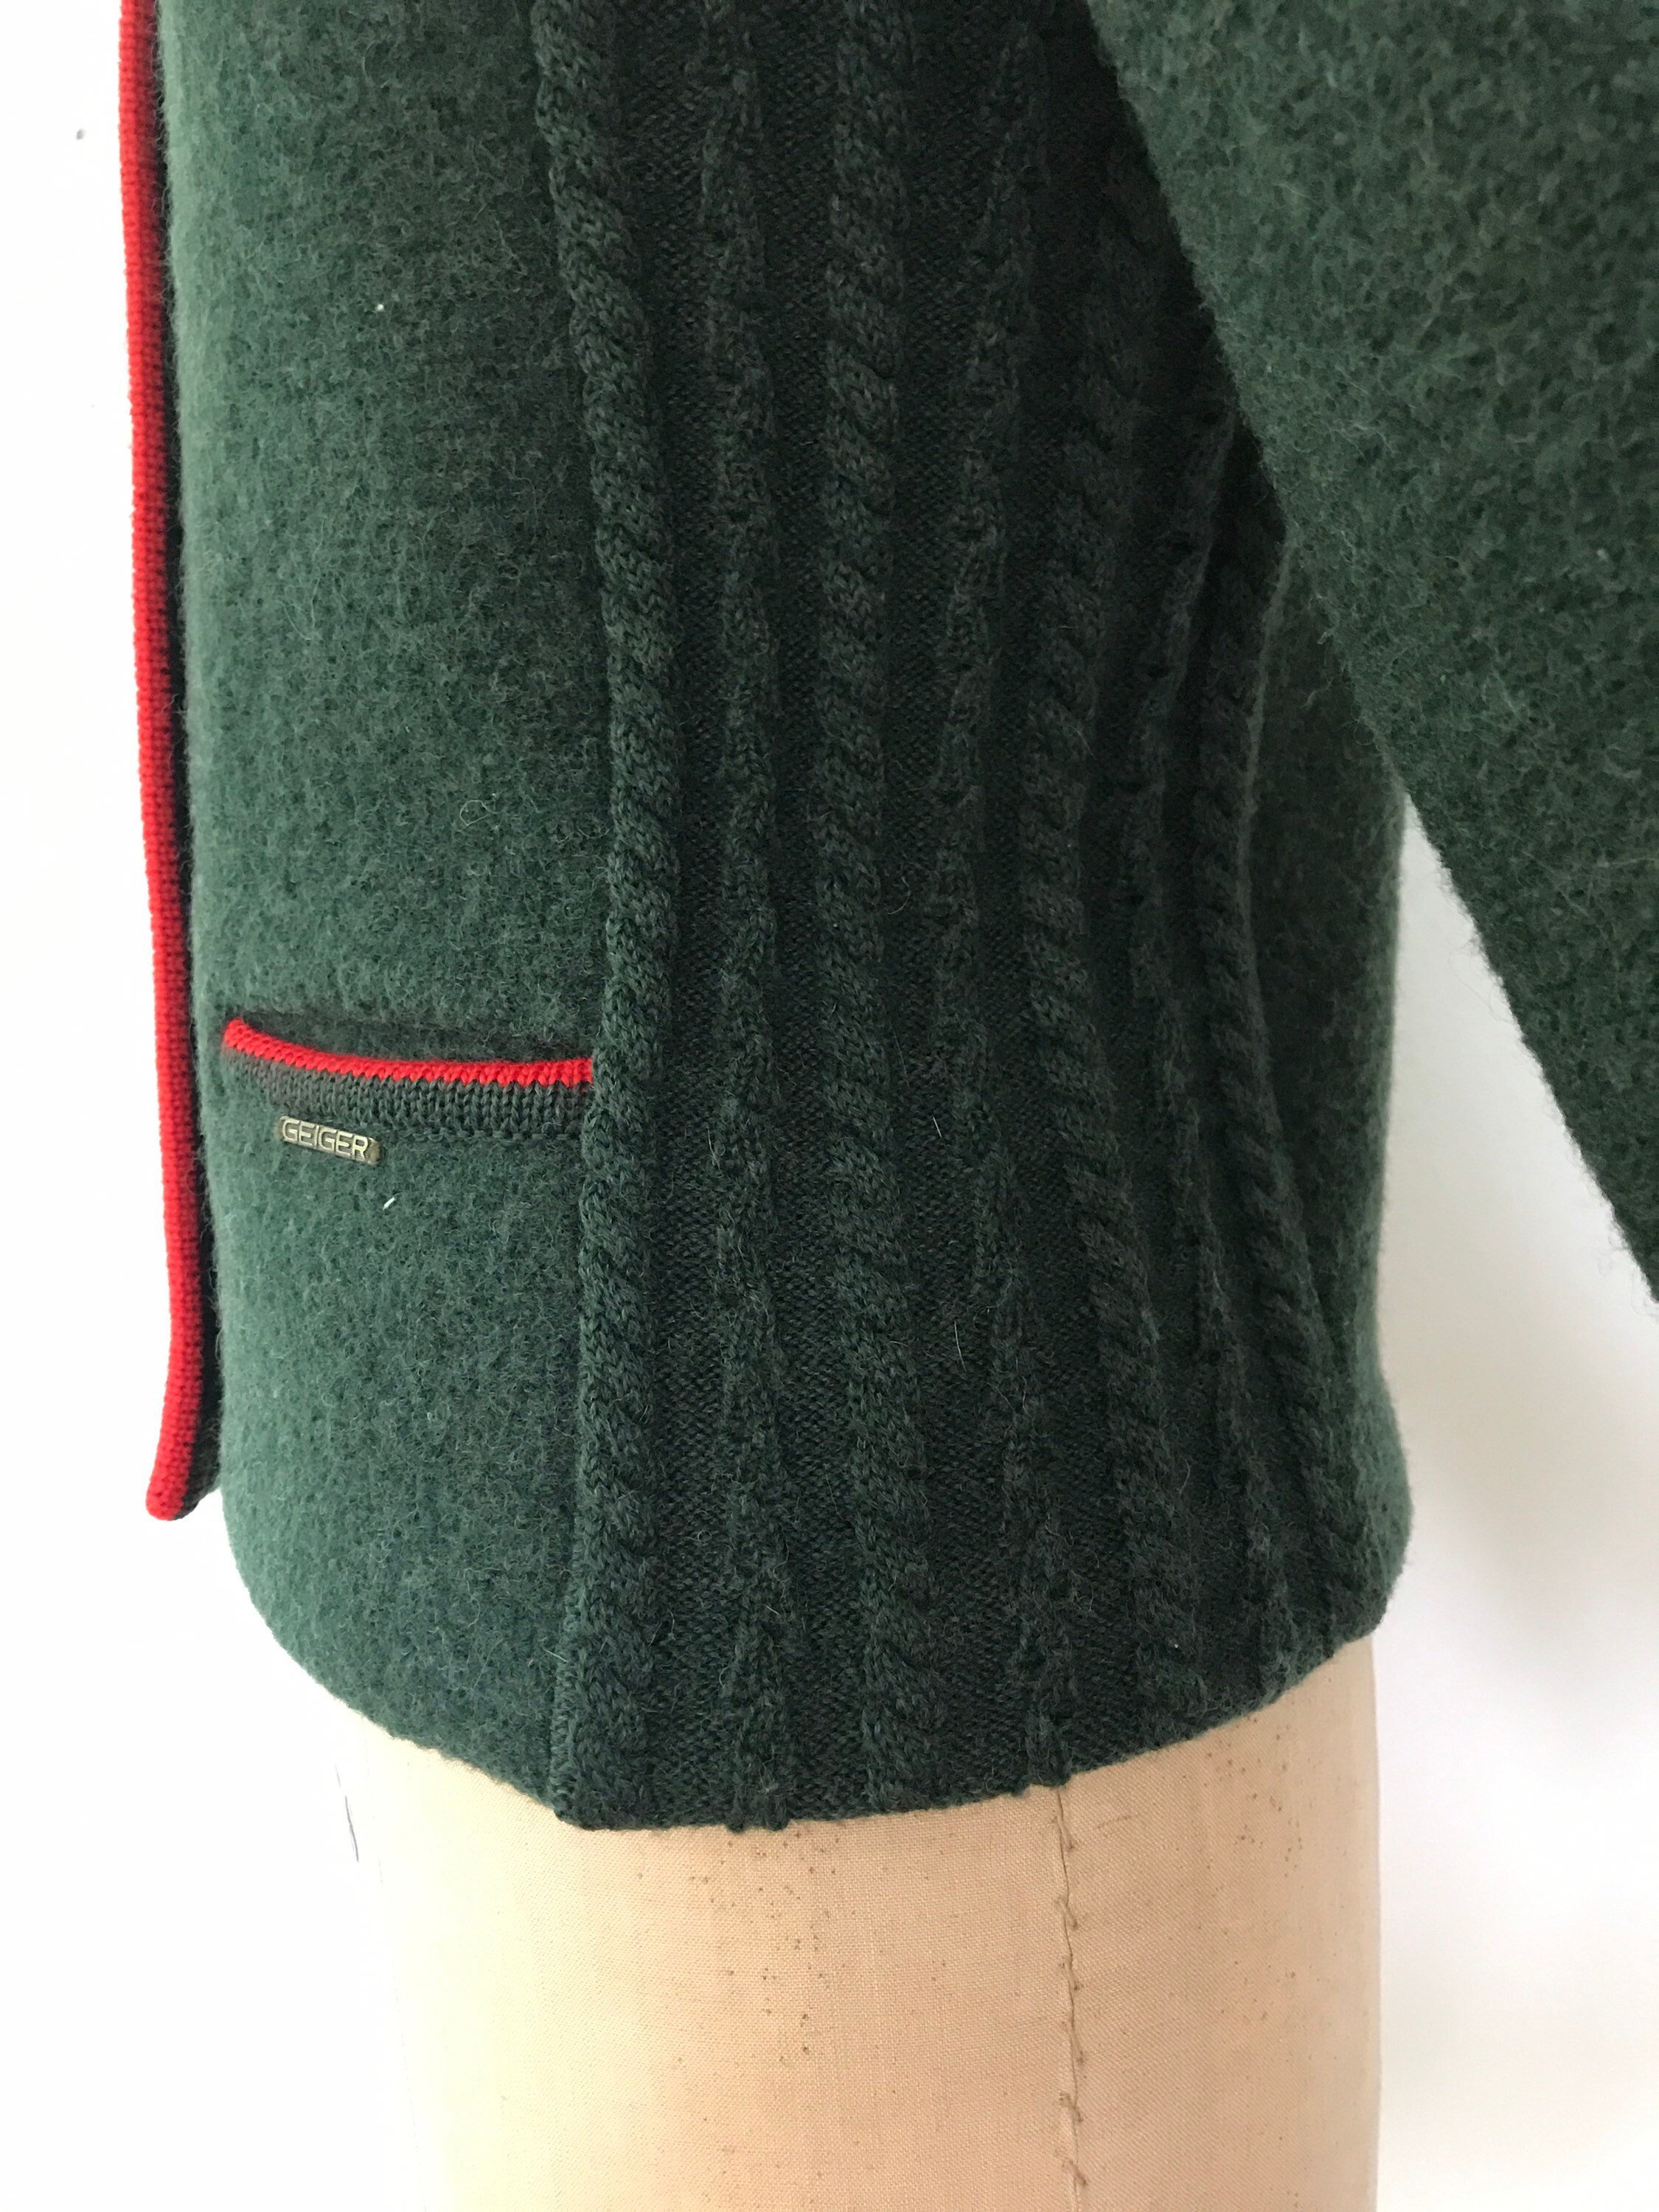 vintage outerwear sweater / vintage knit cardigan / Geiger sweater